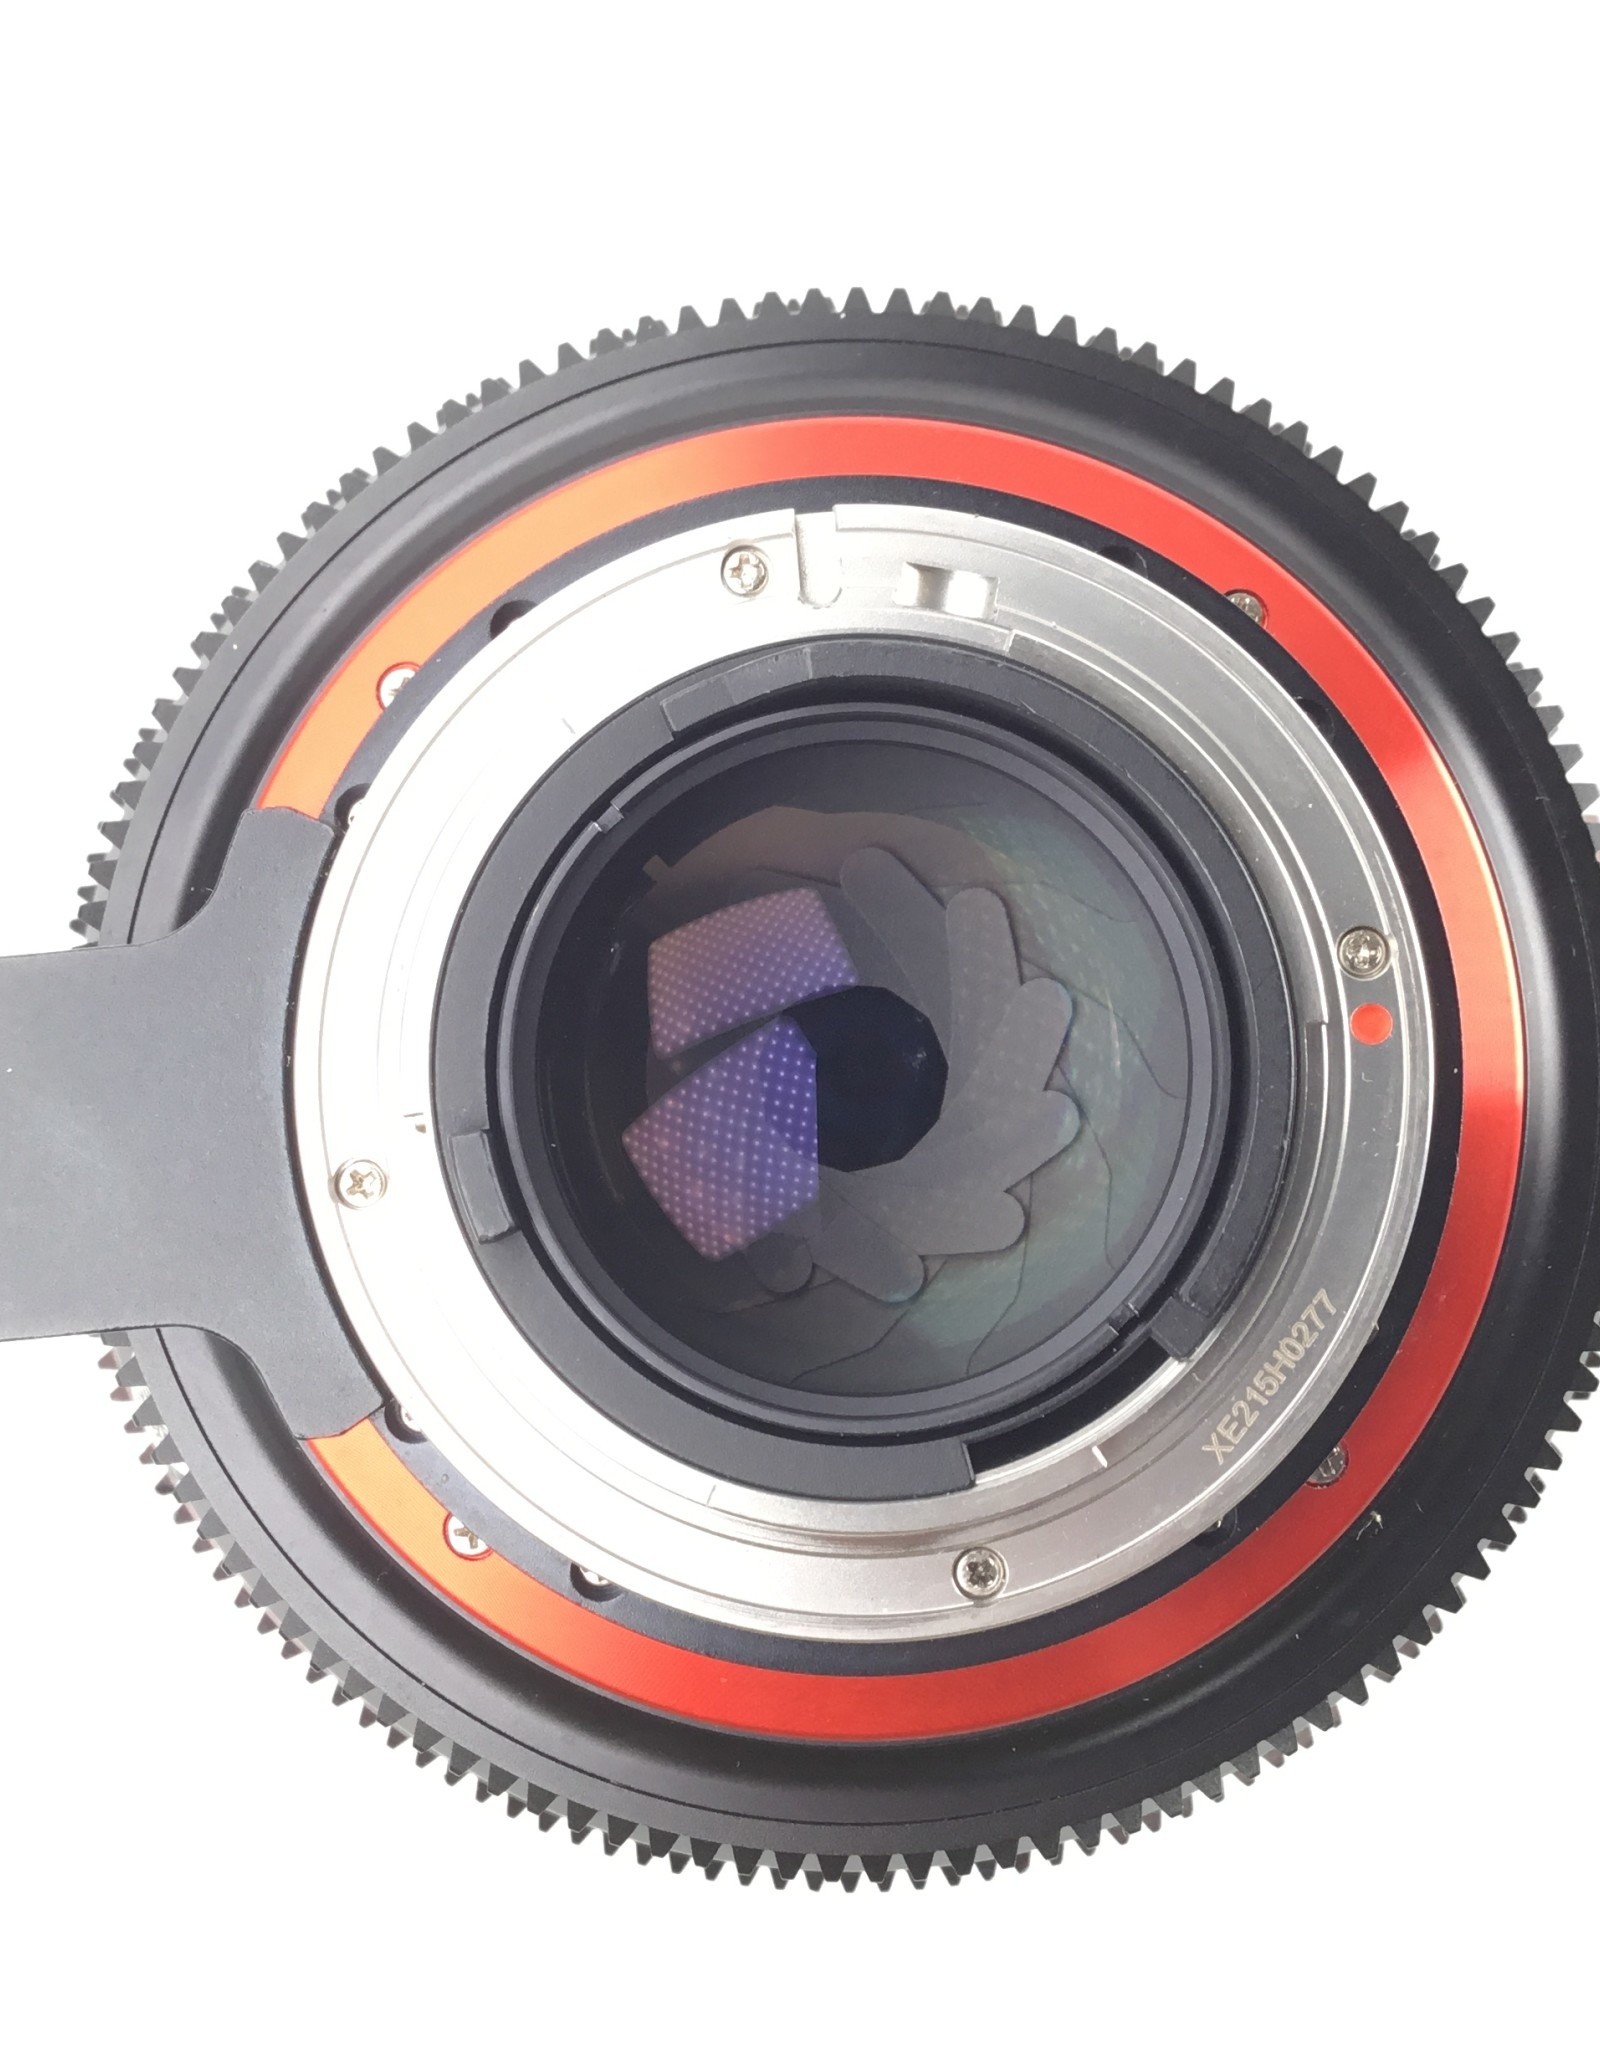 Samyang Zeen 24mm T 1.5 Lens for Nikon F in Box Used EX